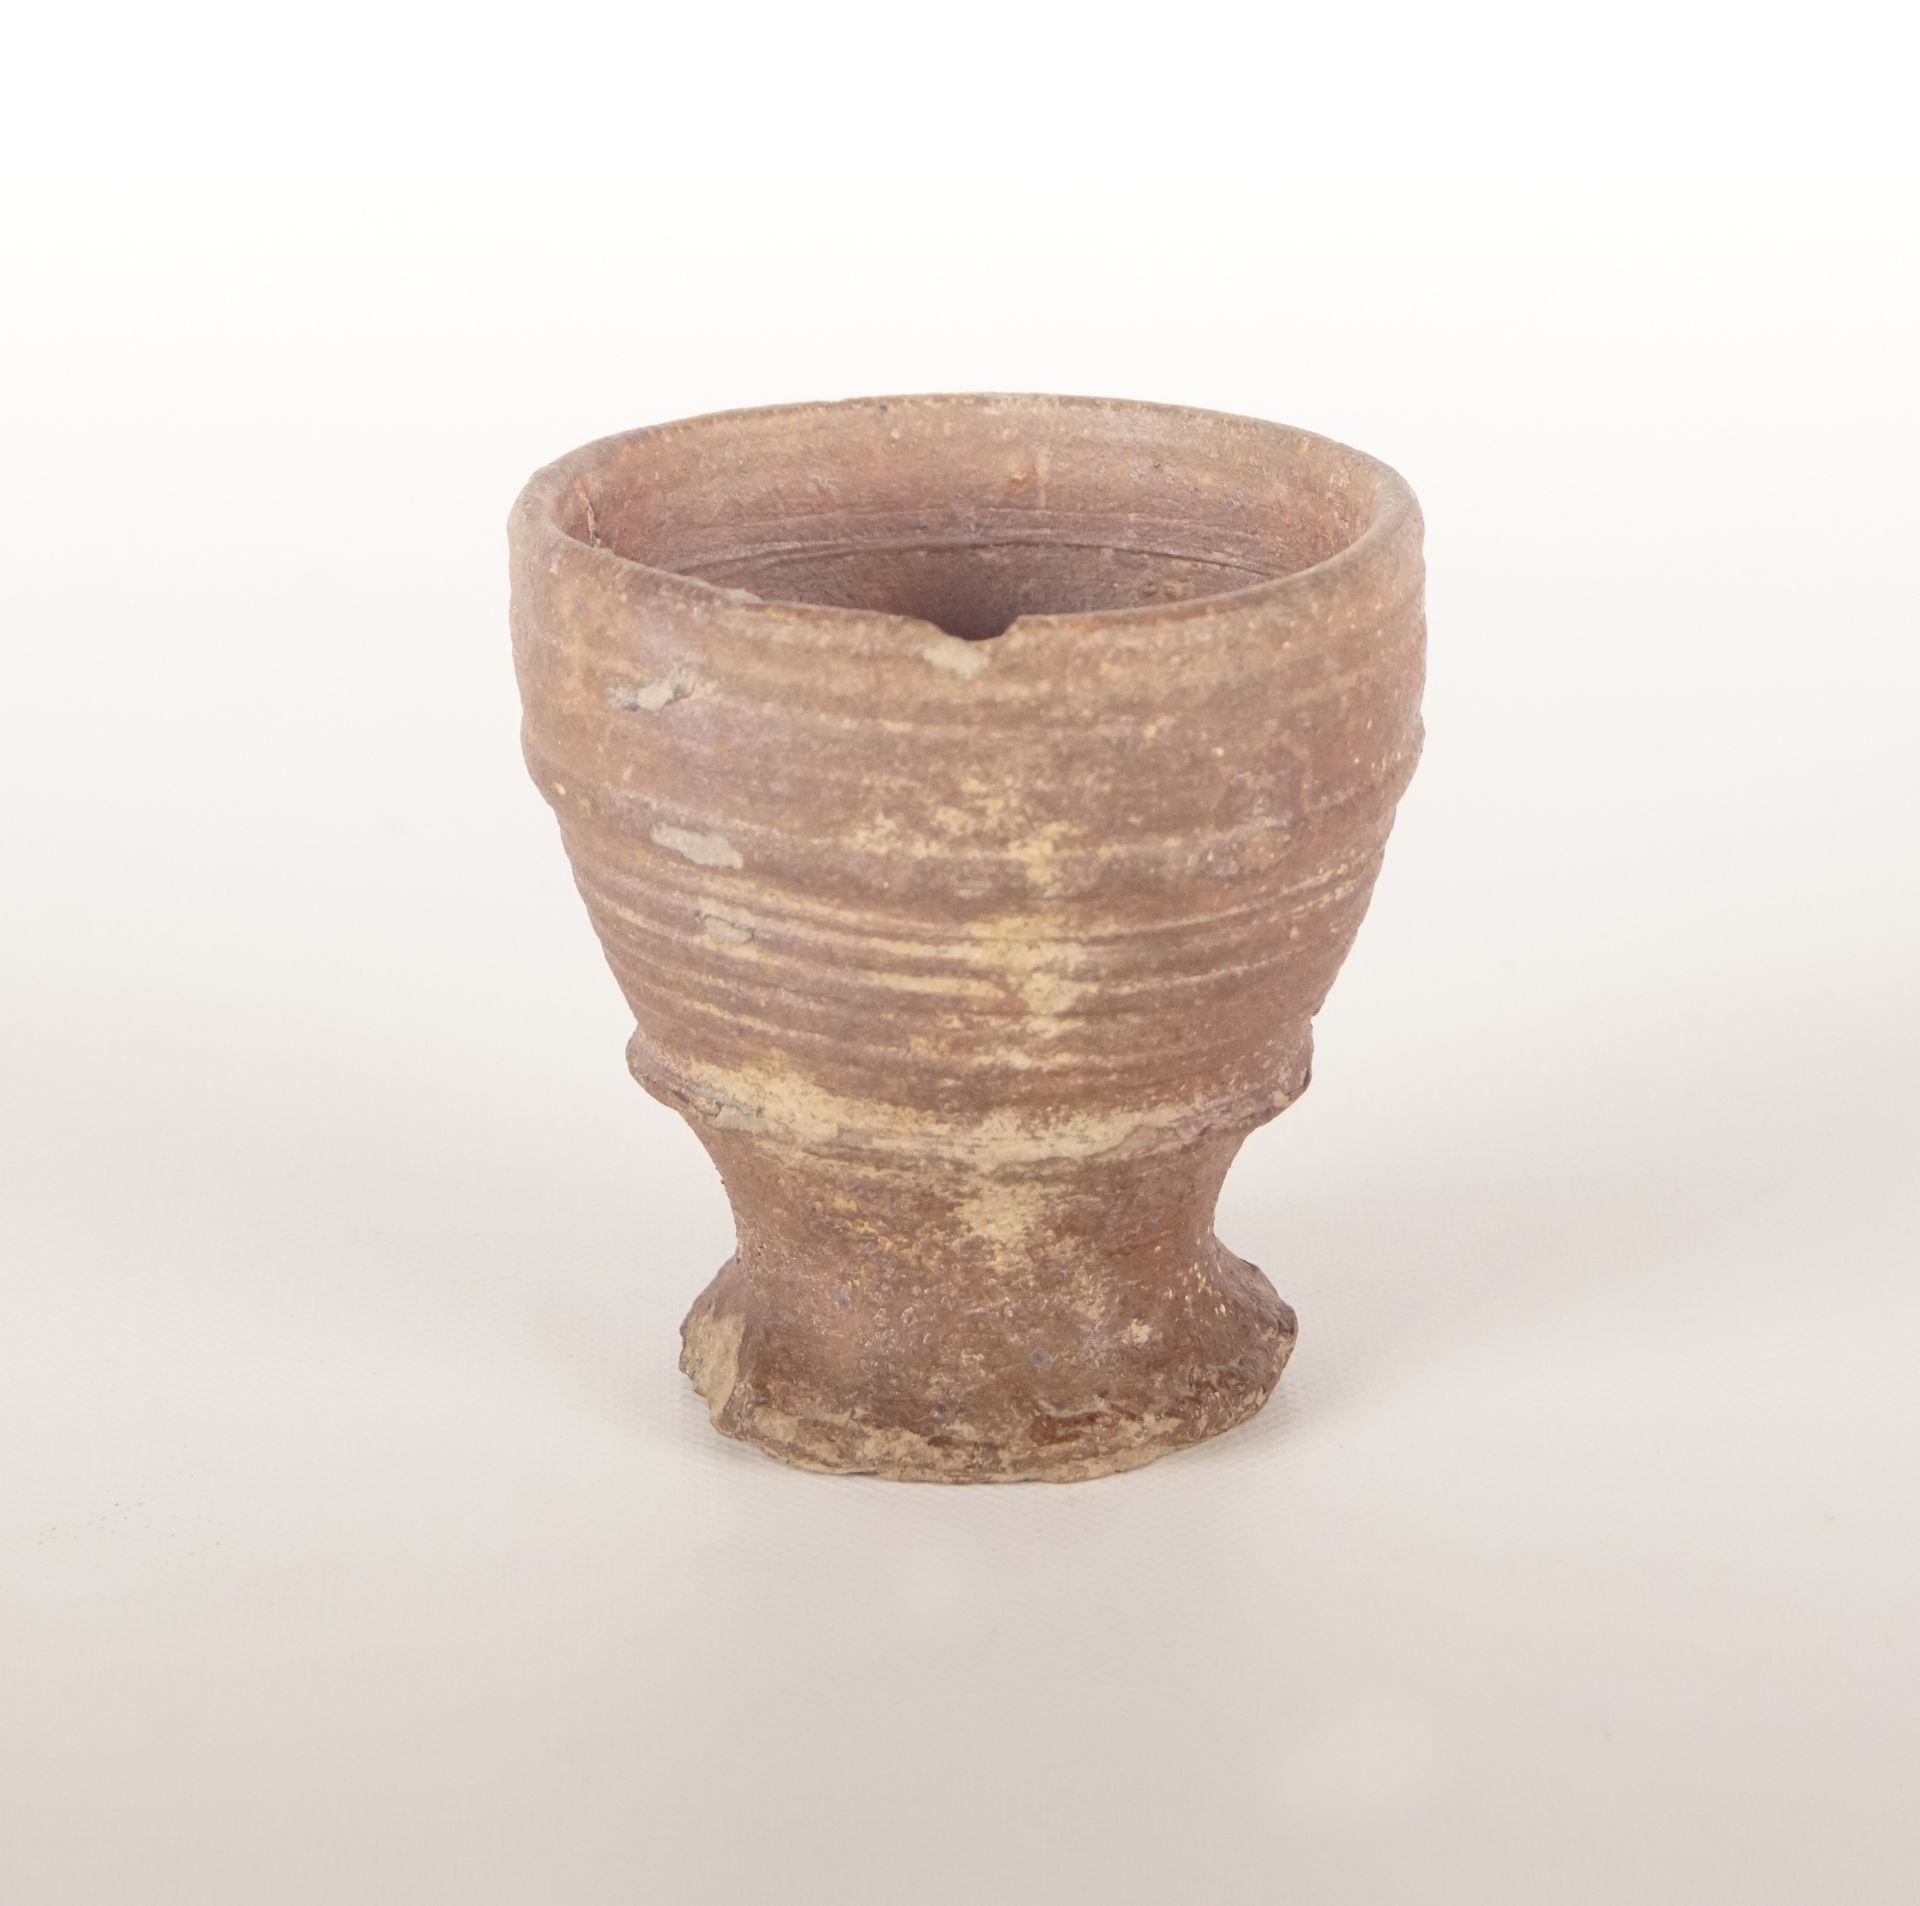 Rome Antique ou gaulle romaine? Sandstone cup.